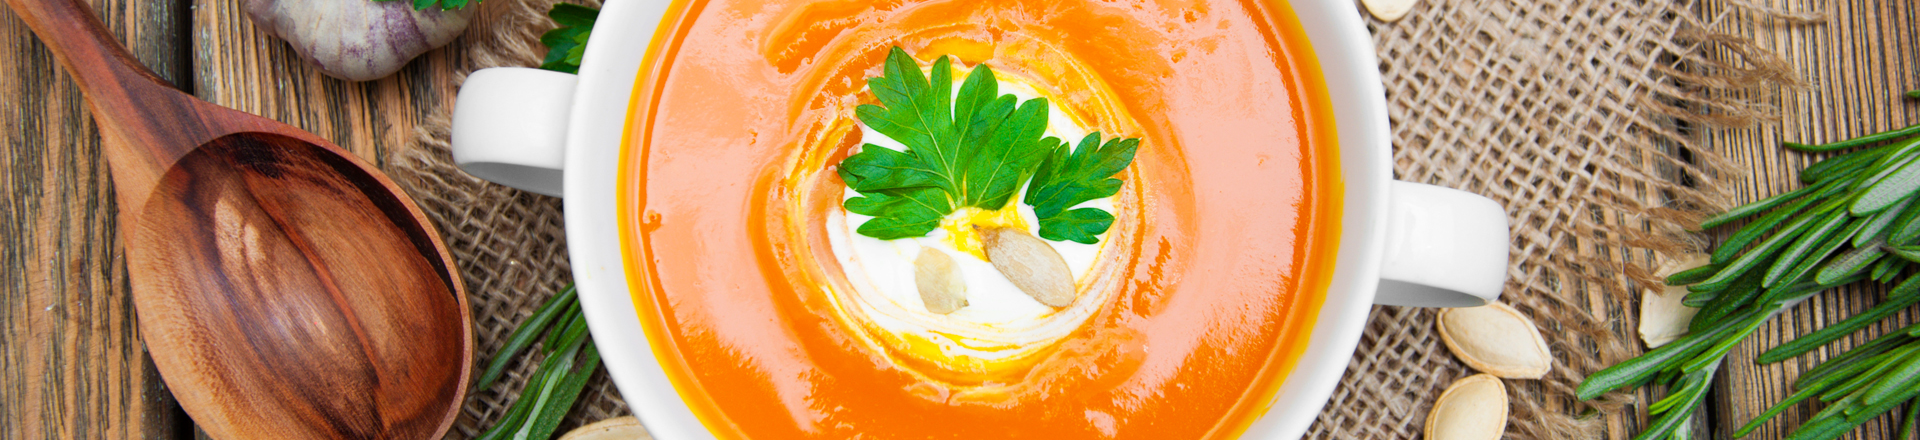 Pumpkin and Potato Soup